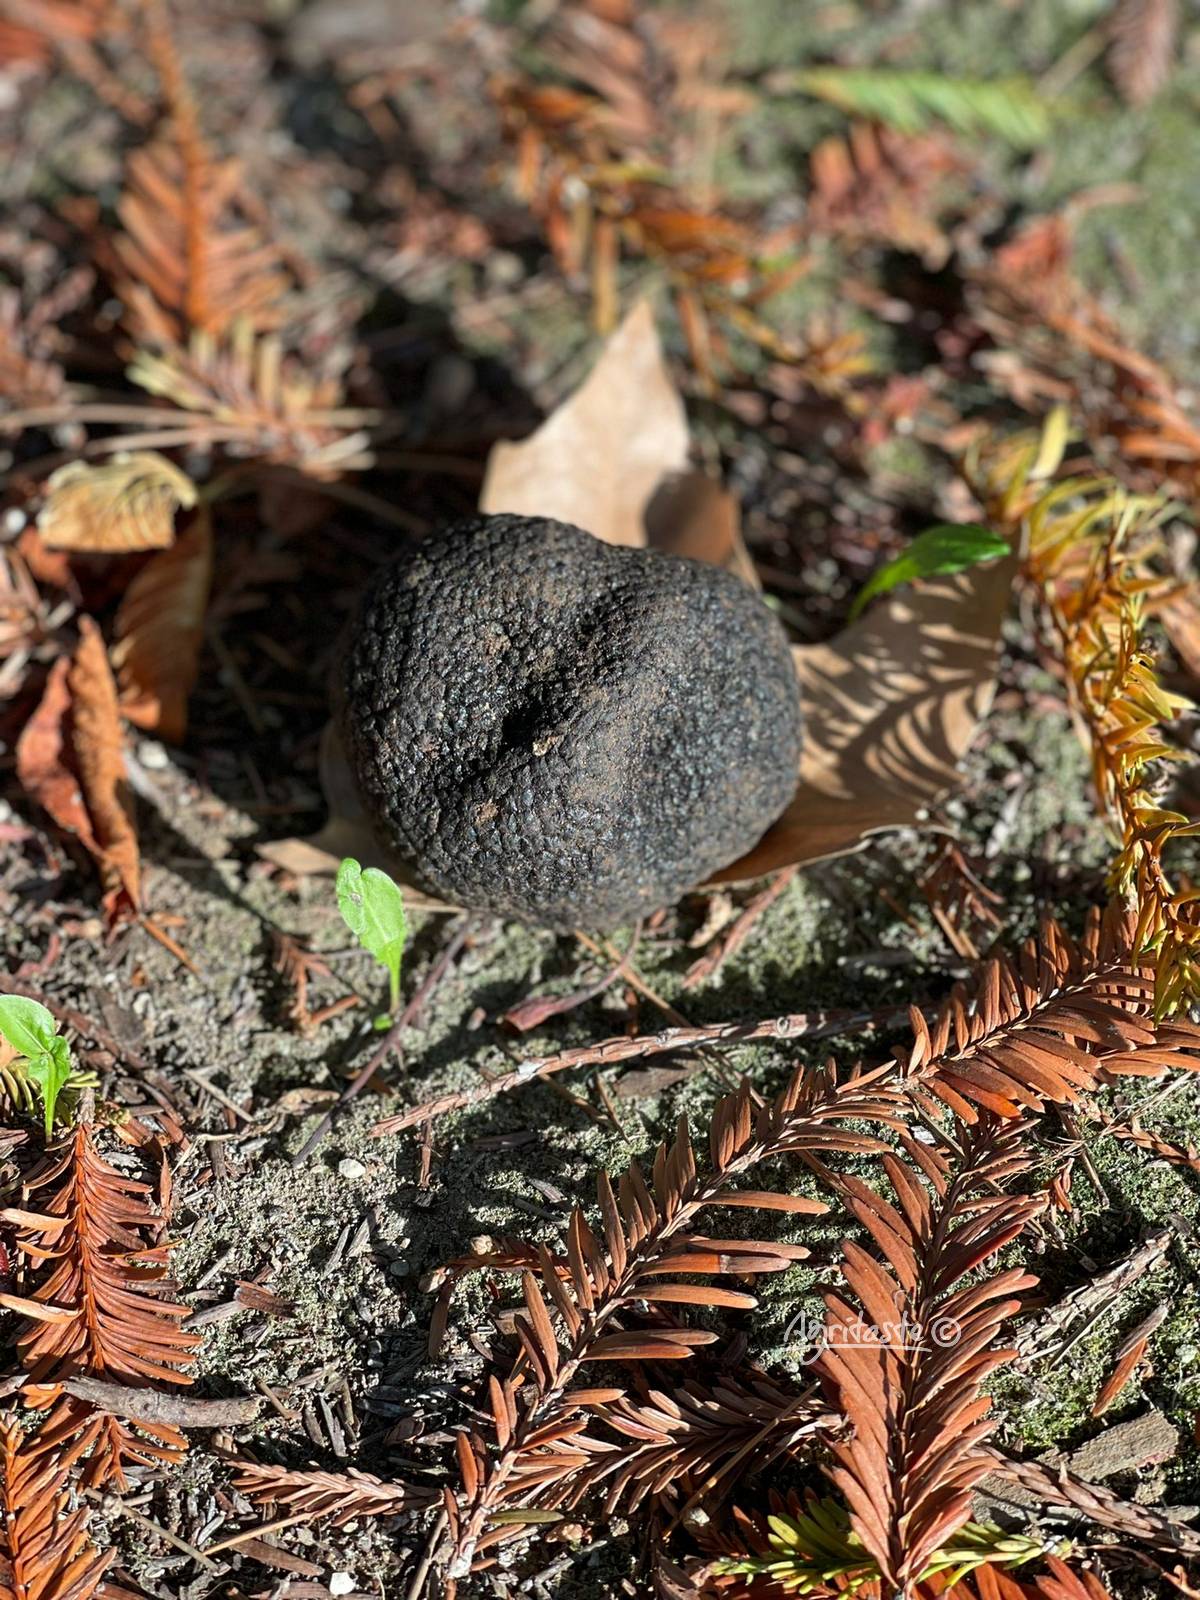 Umbrian truffle